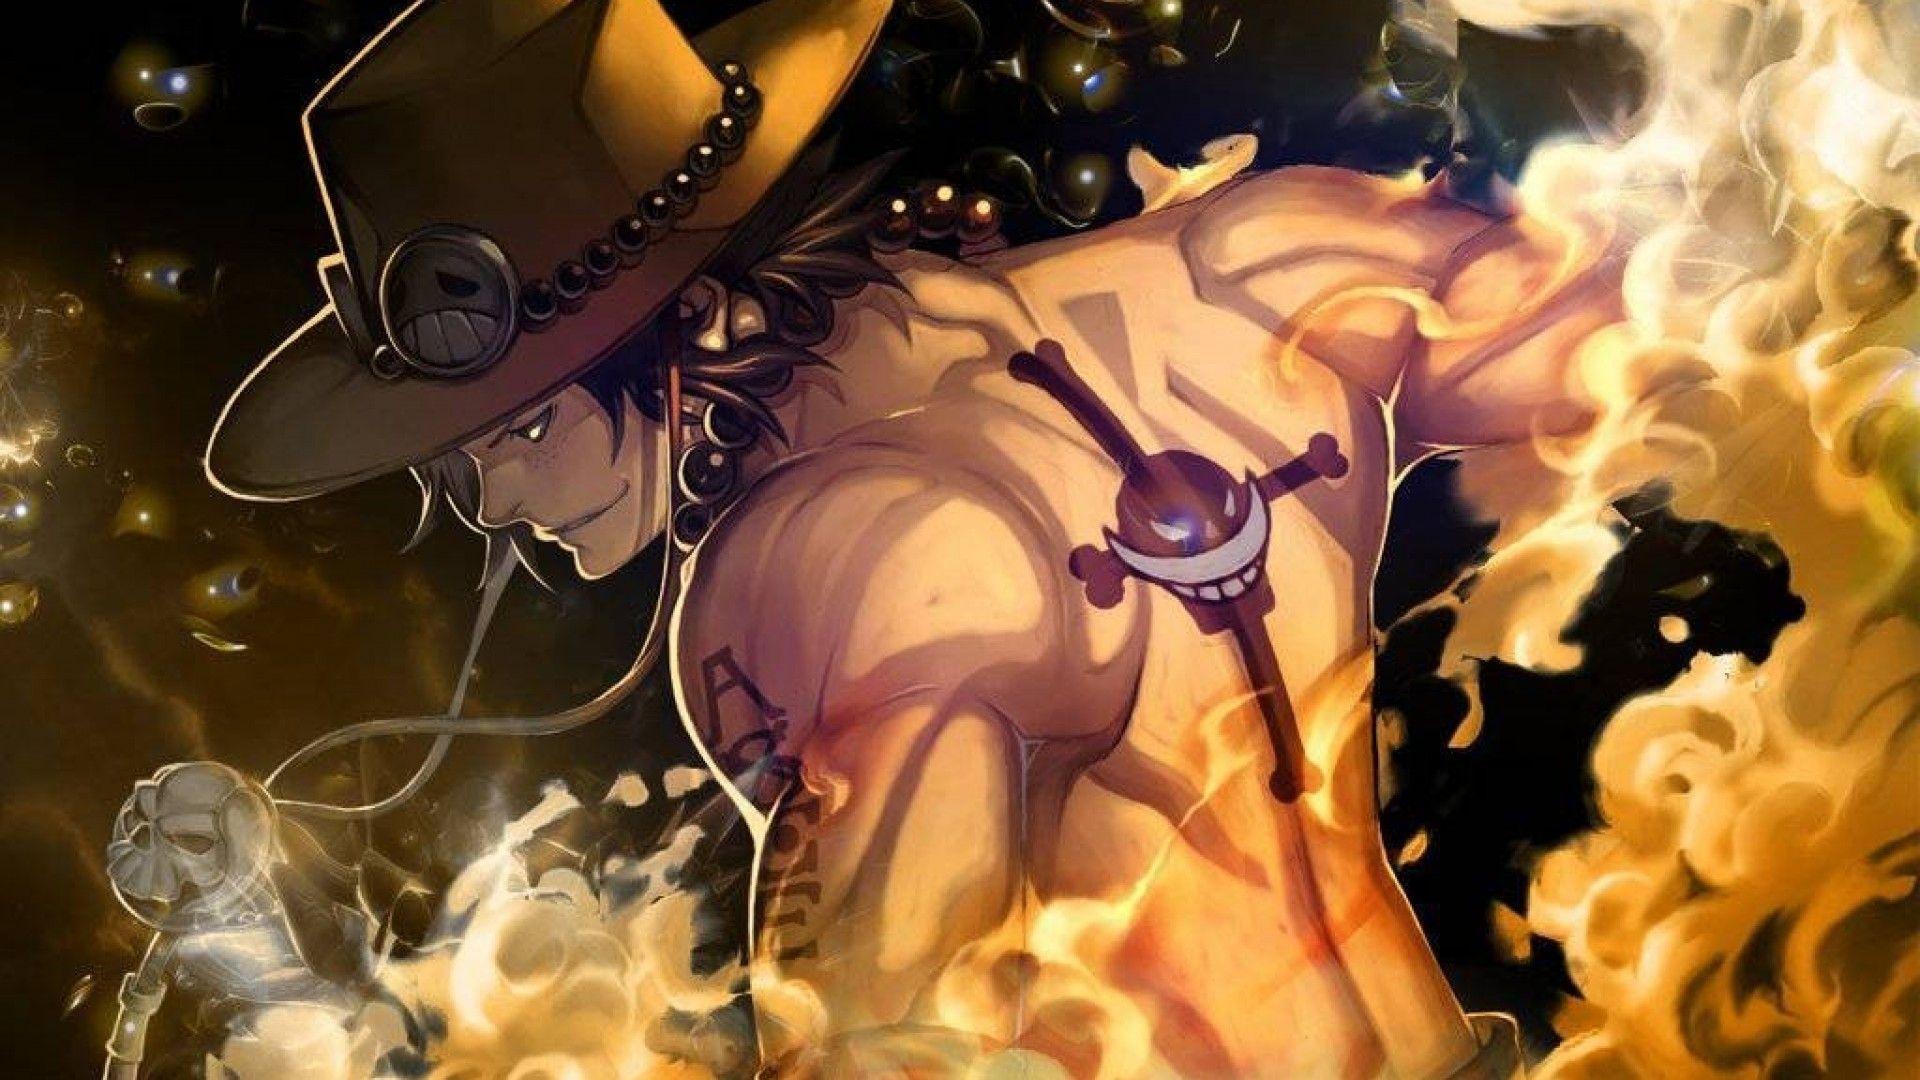 One Piece wallpaper HDDownload free stunning High Resolution